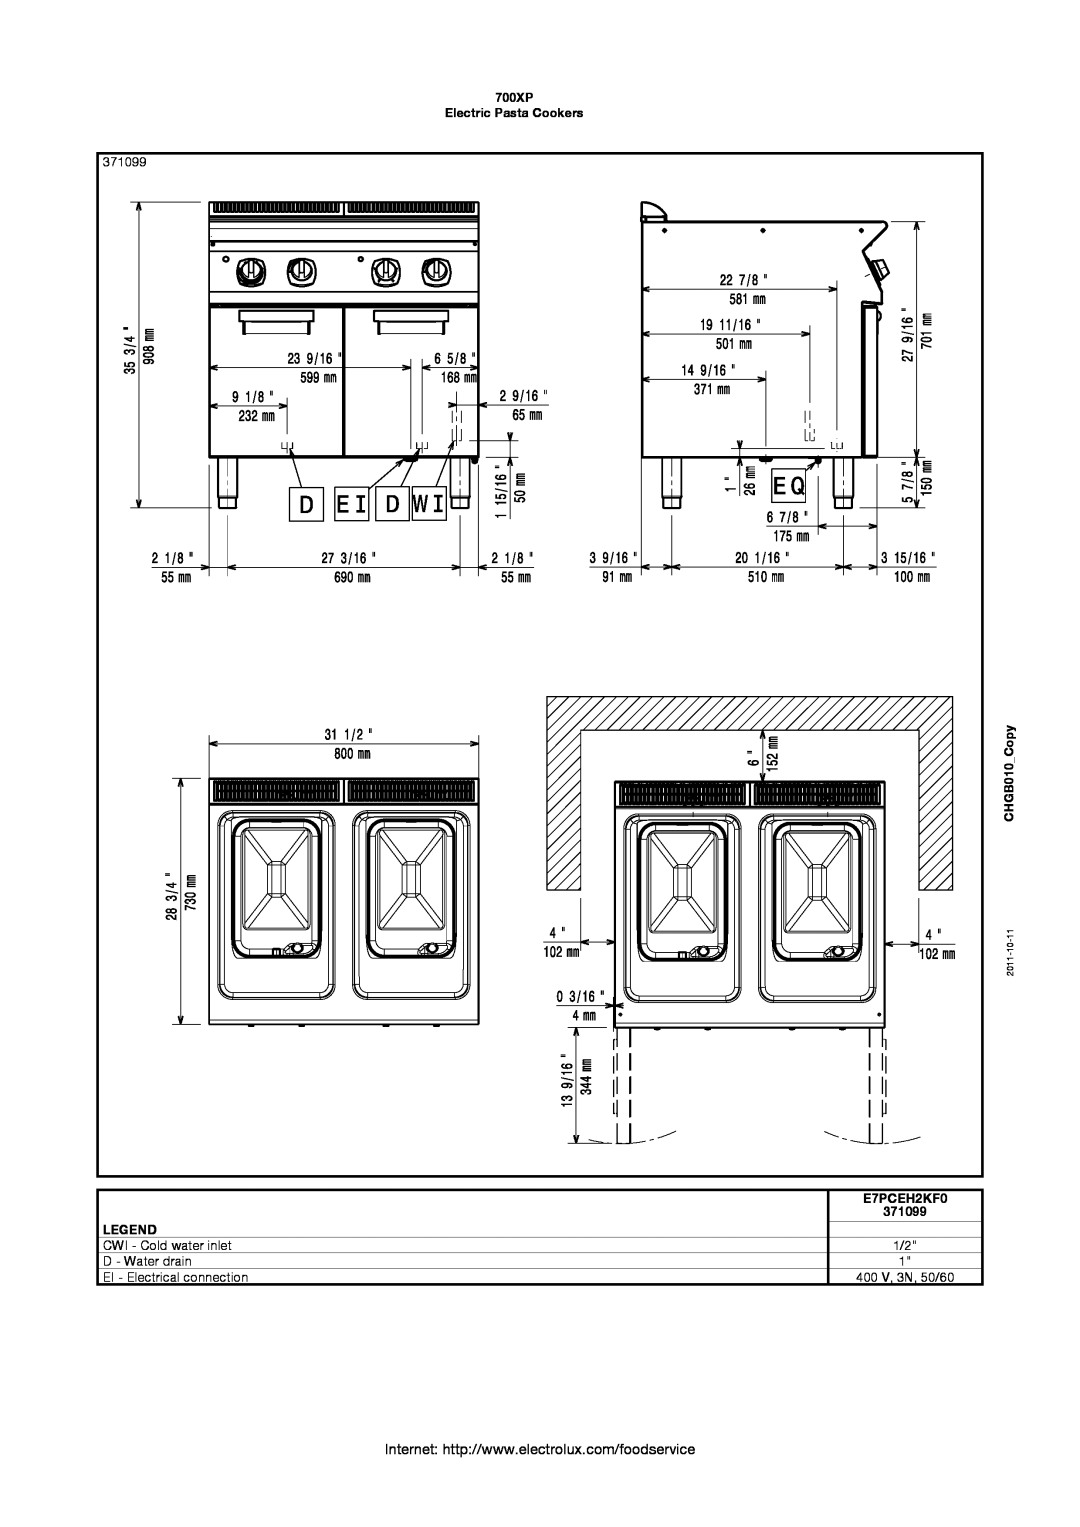 Electrolux manual 371099, 700XP Electric Pasta Cookers, CHGB010 Copy, E7PCEH2KF0, 2011-10-11 